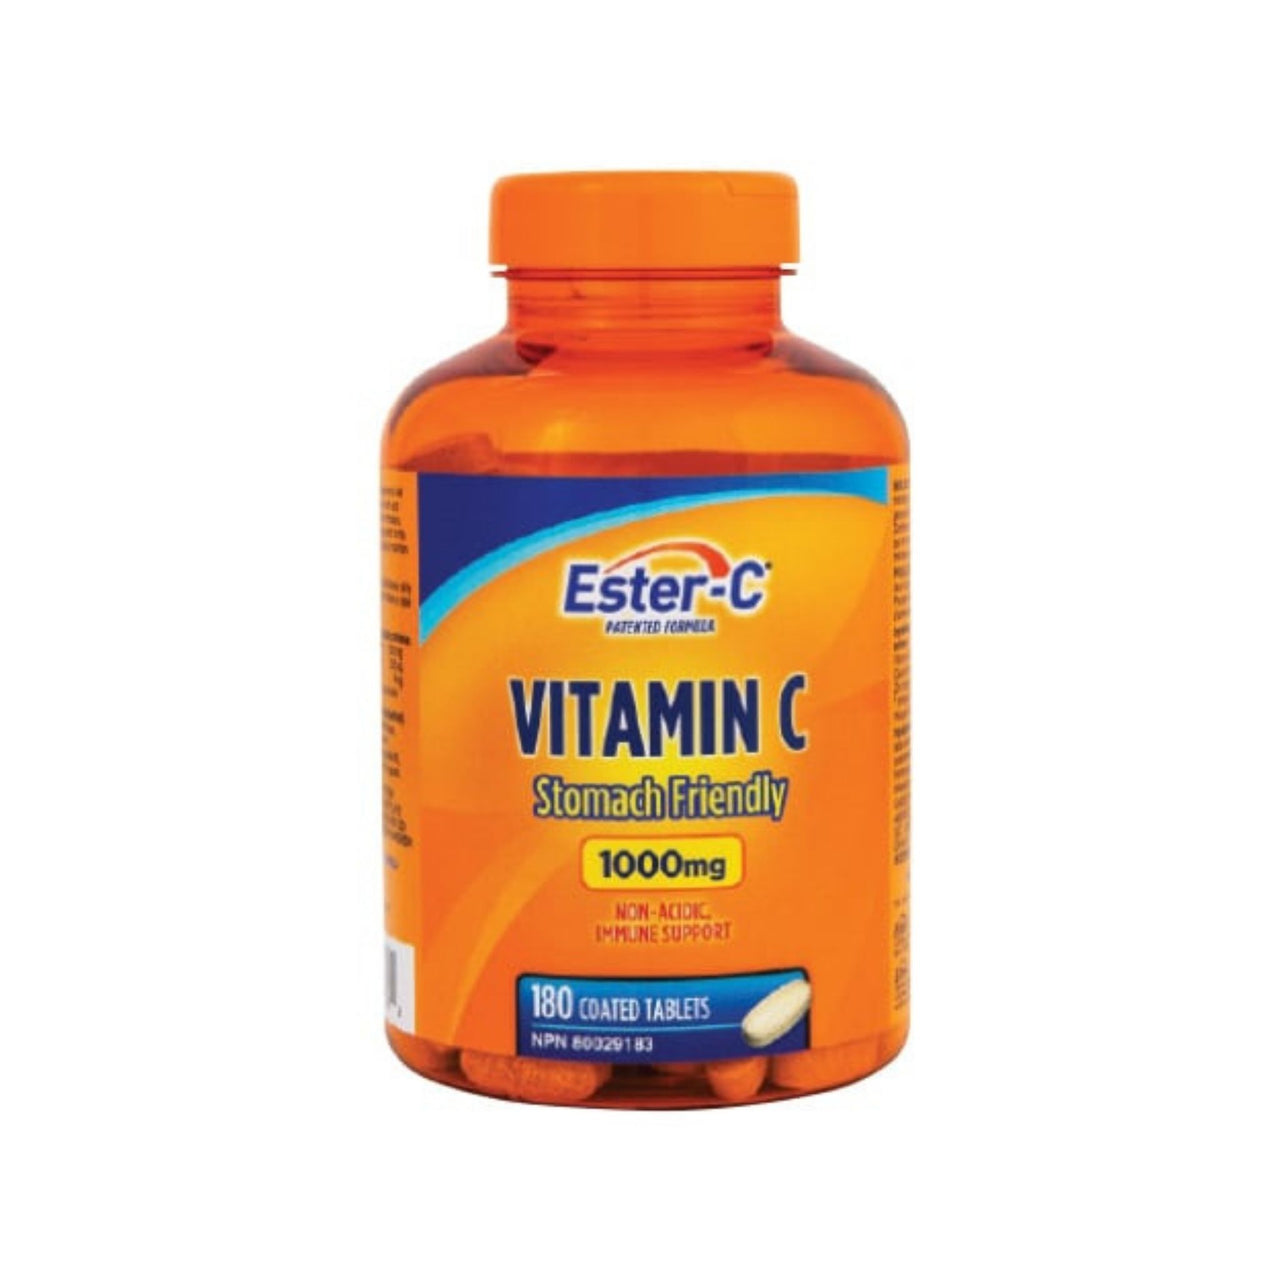 Image of Ester-C vitamin C, 1000mg